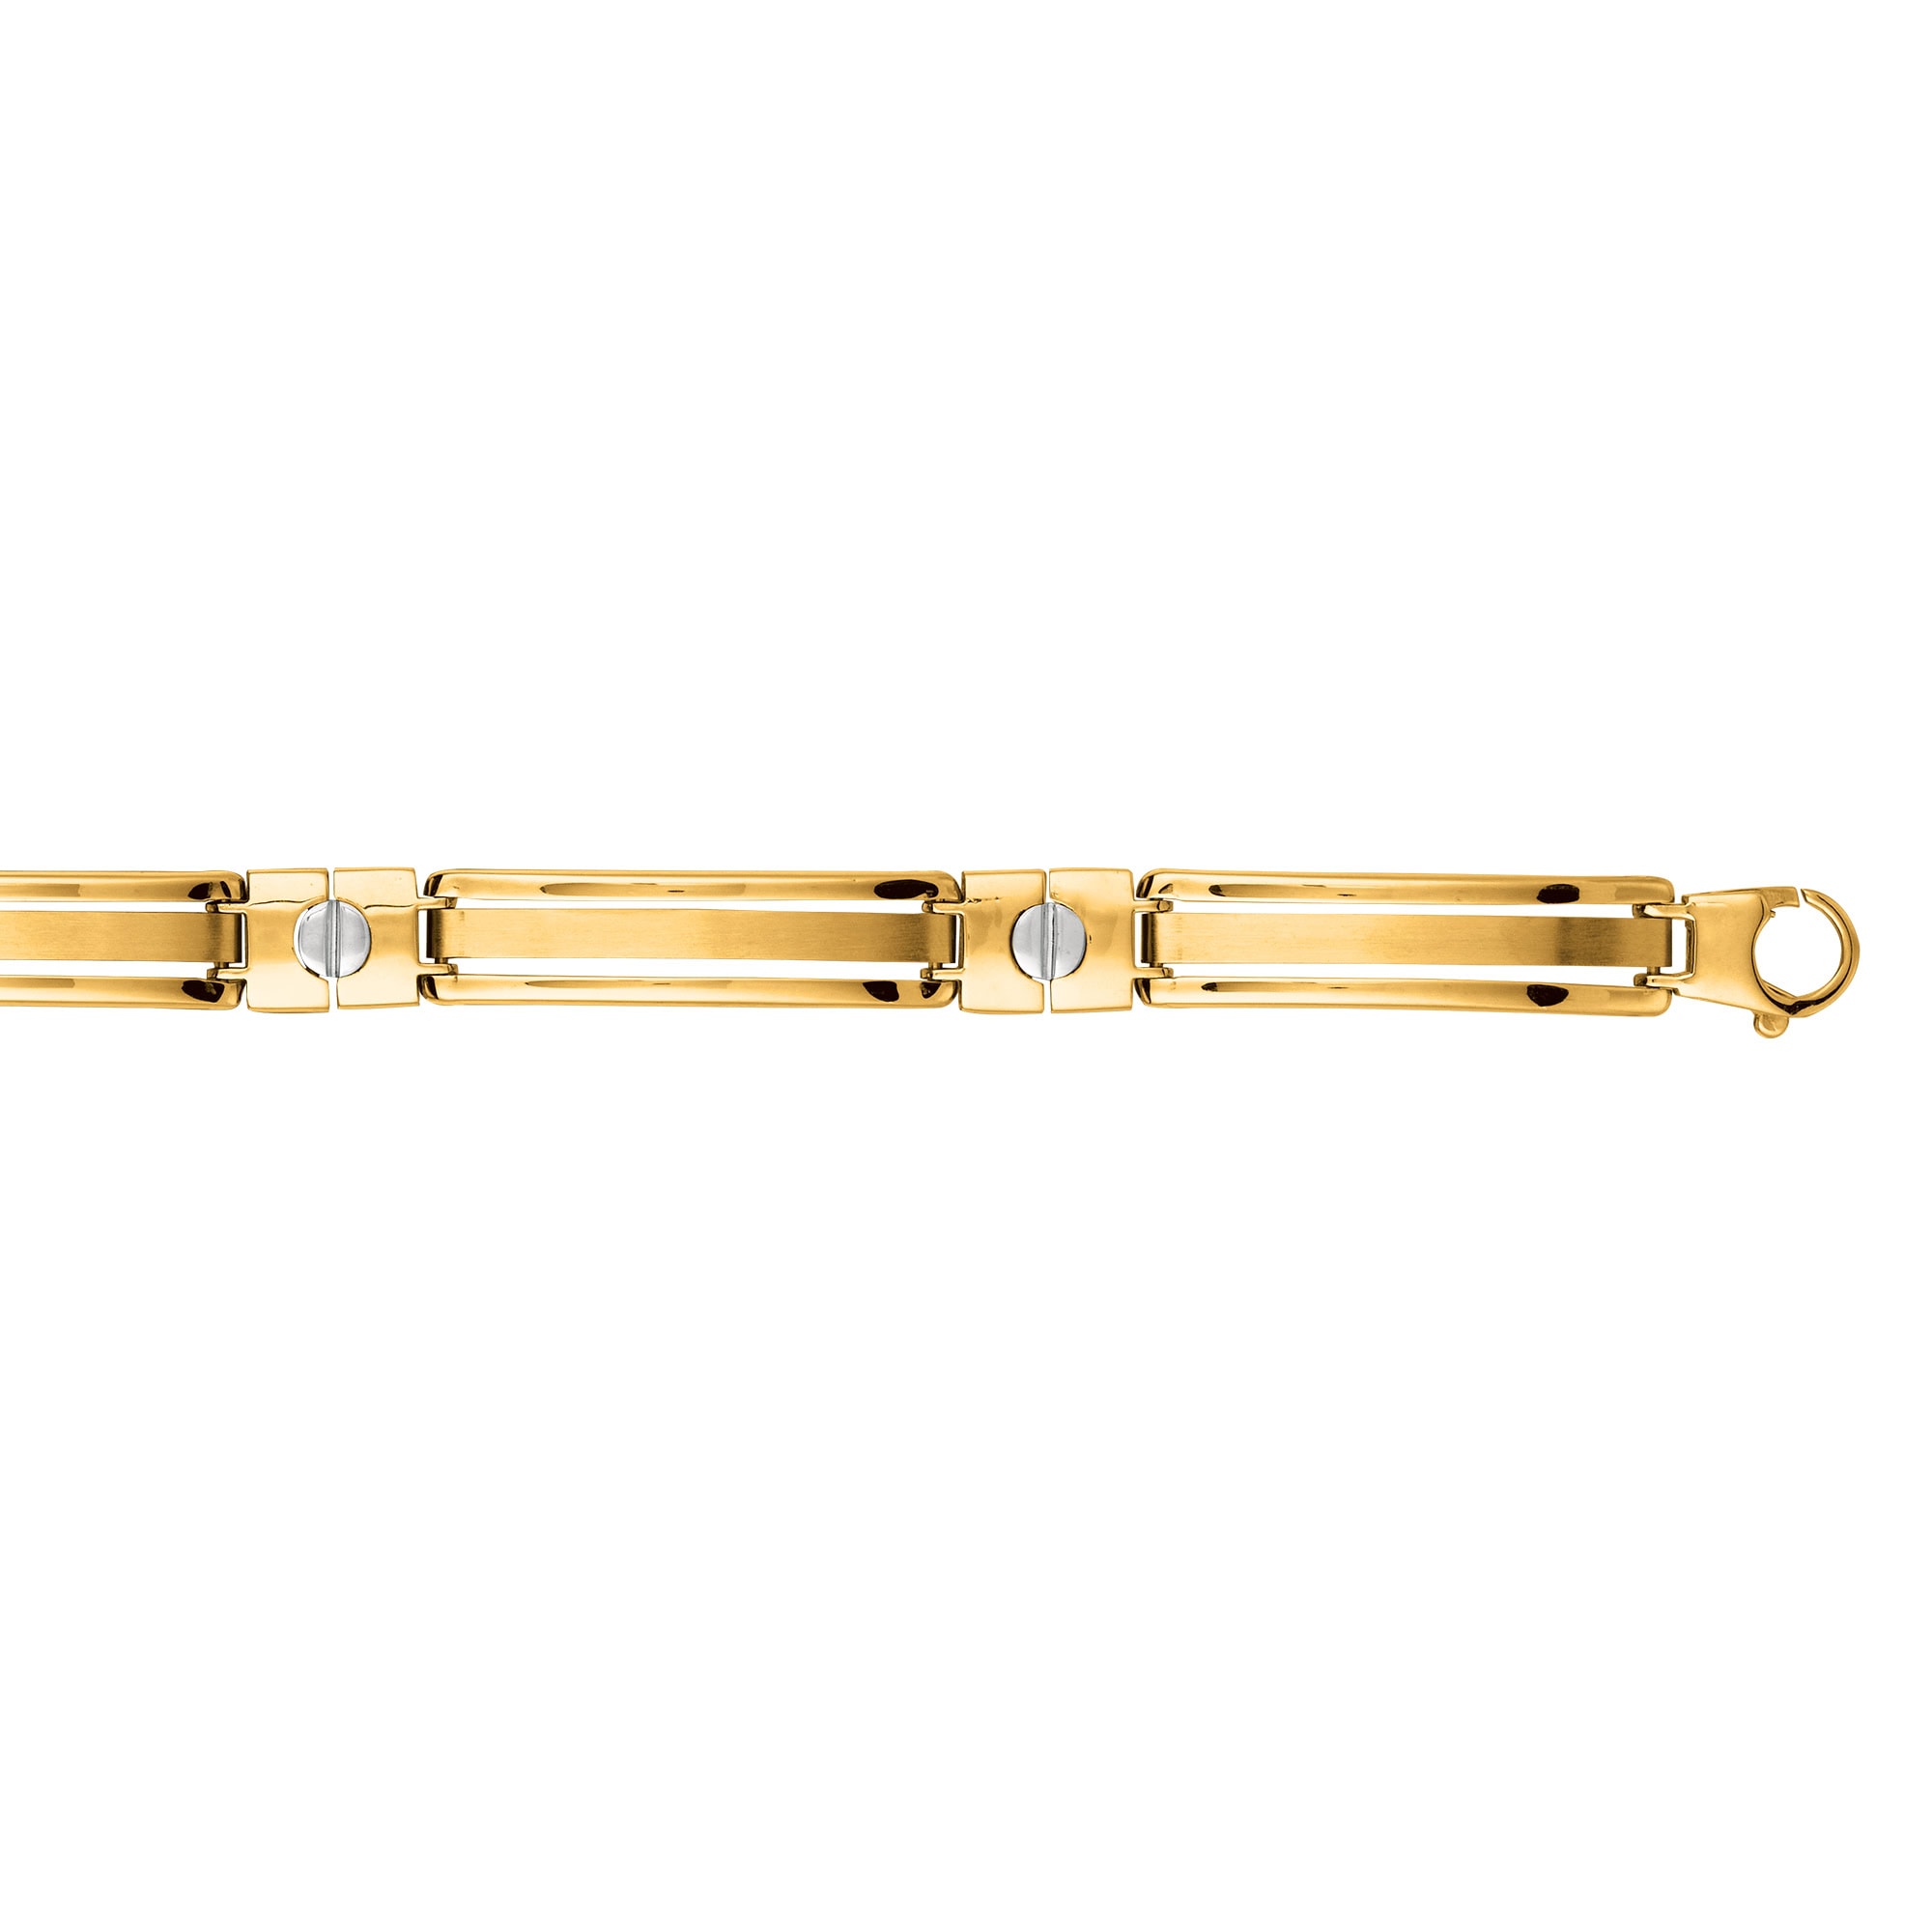 14K Gold Railroad Link with Screw Detail Bracelet